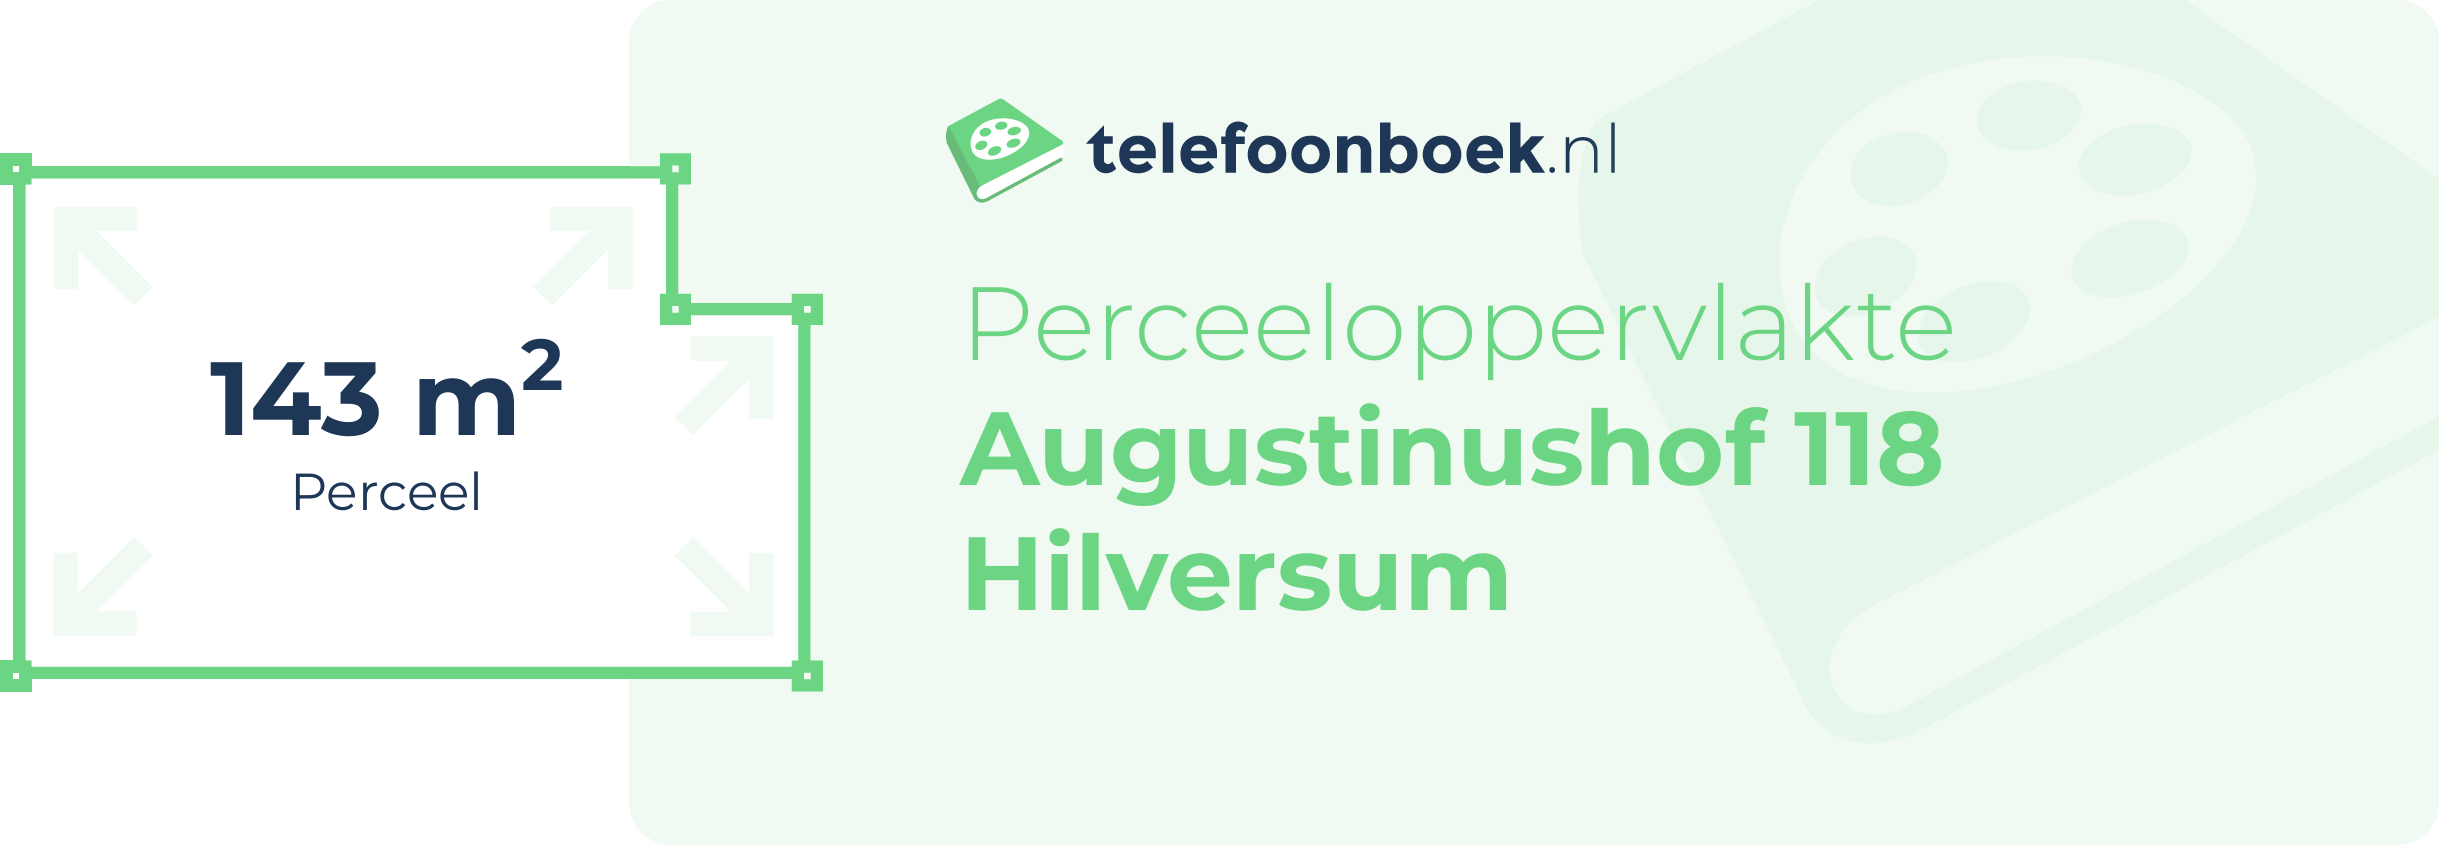 Perceeloppervlakte Augustinushof 118 Hilversum